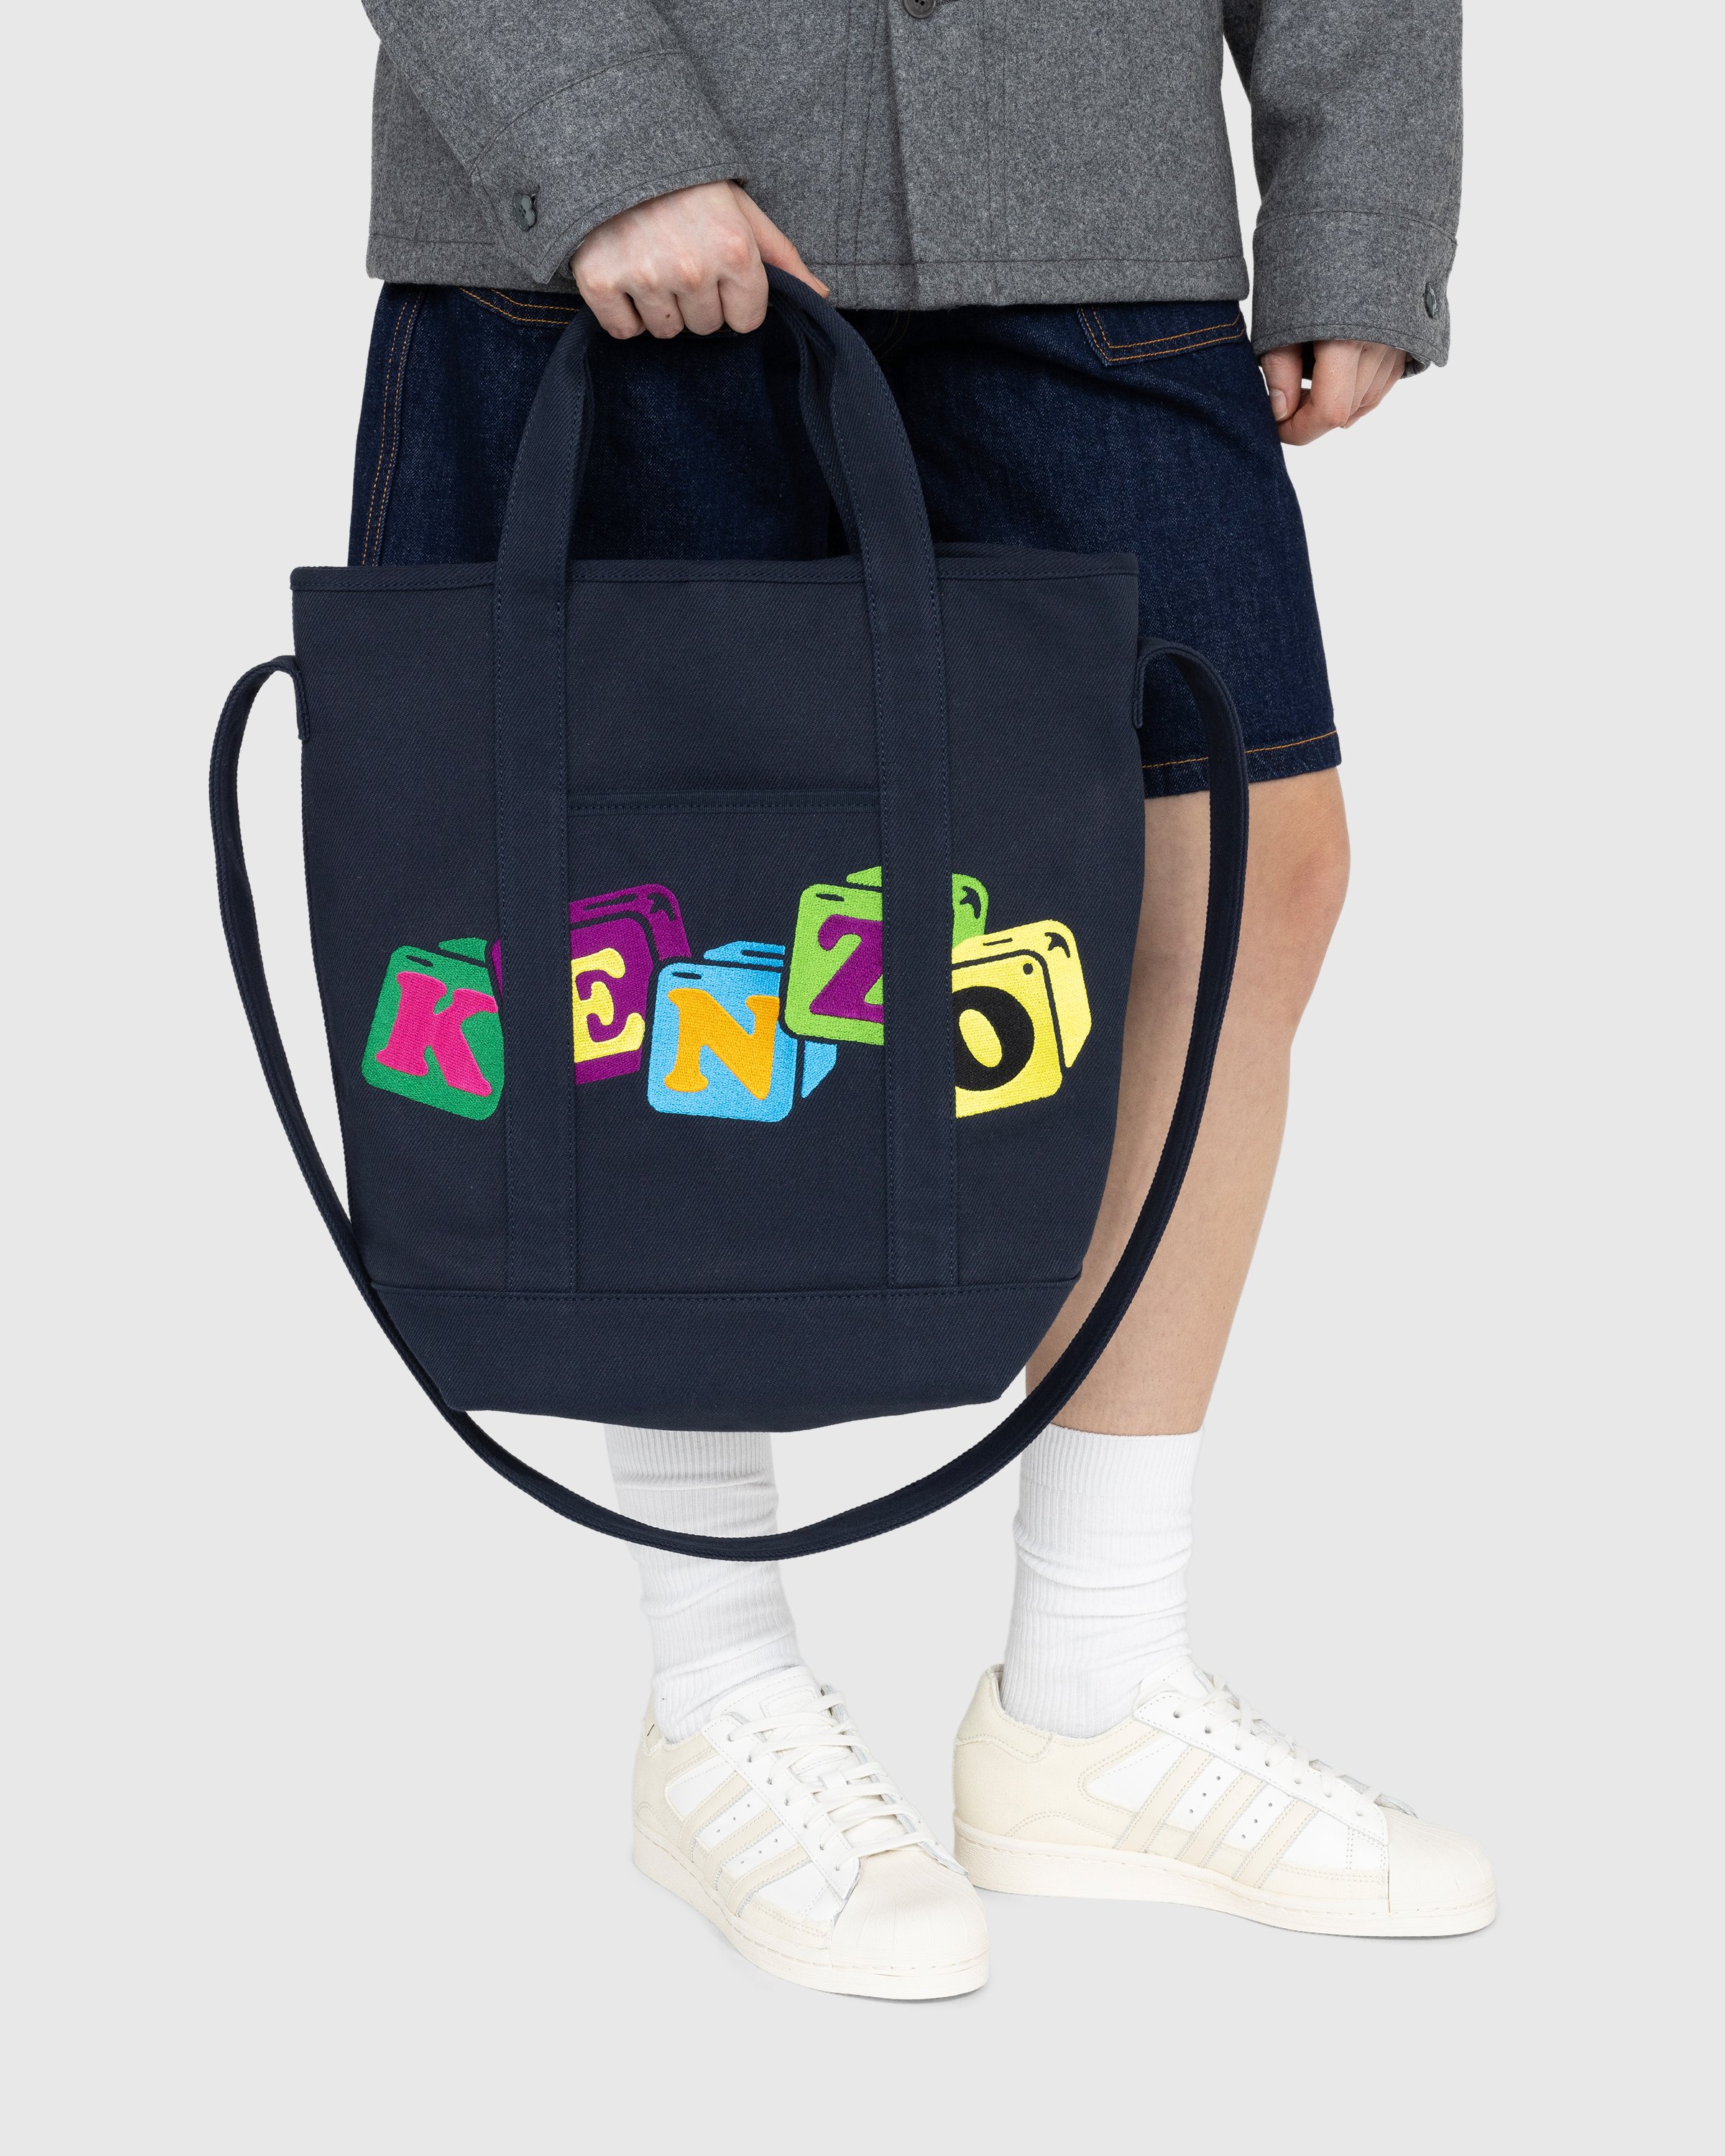 Kenzo - BOKE Boy Tote Bag Blue - Accessories - Blue - Image 4